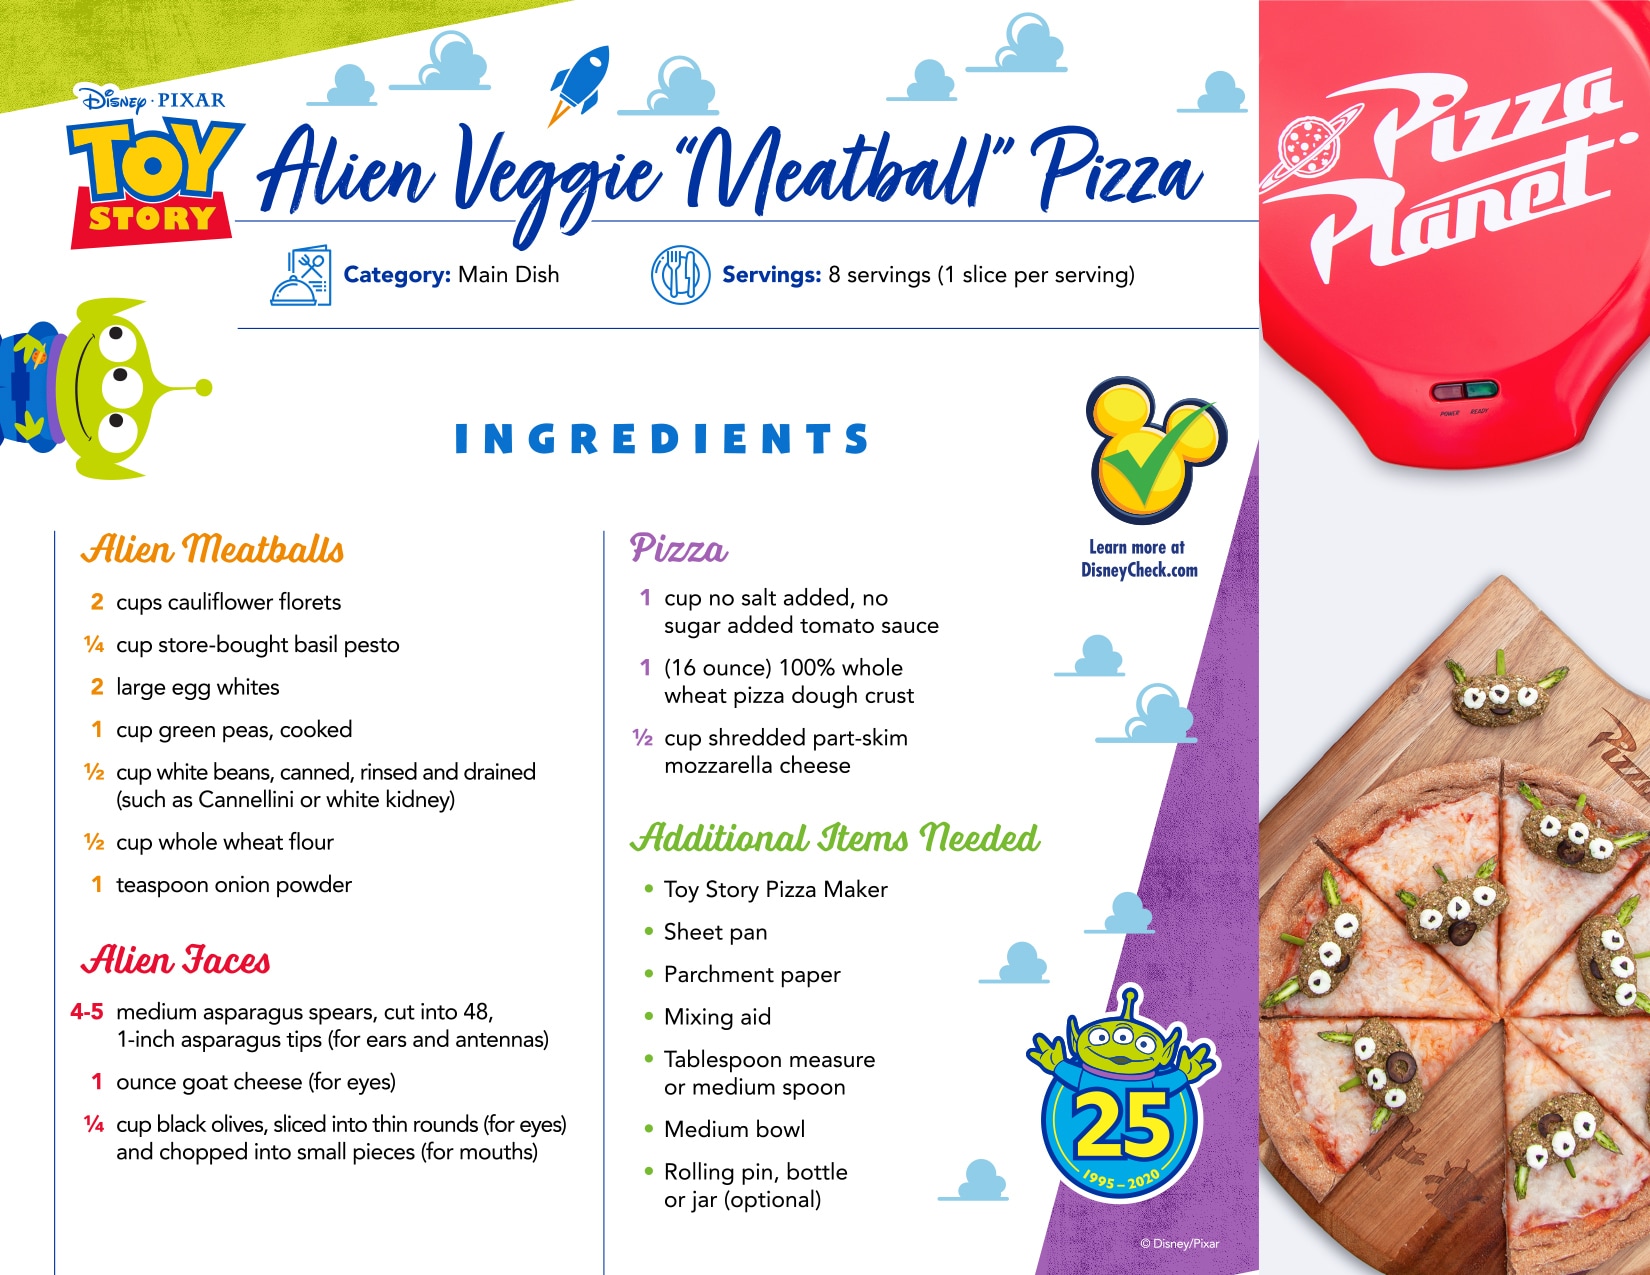 Alien Veggie 'Meatball' Pizza